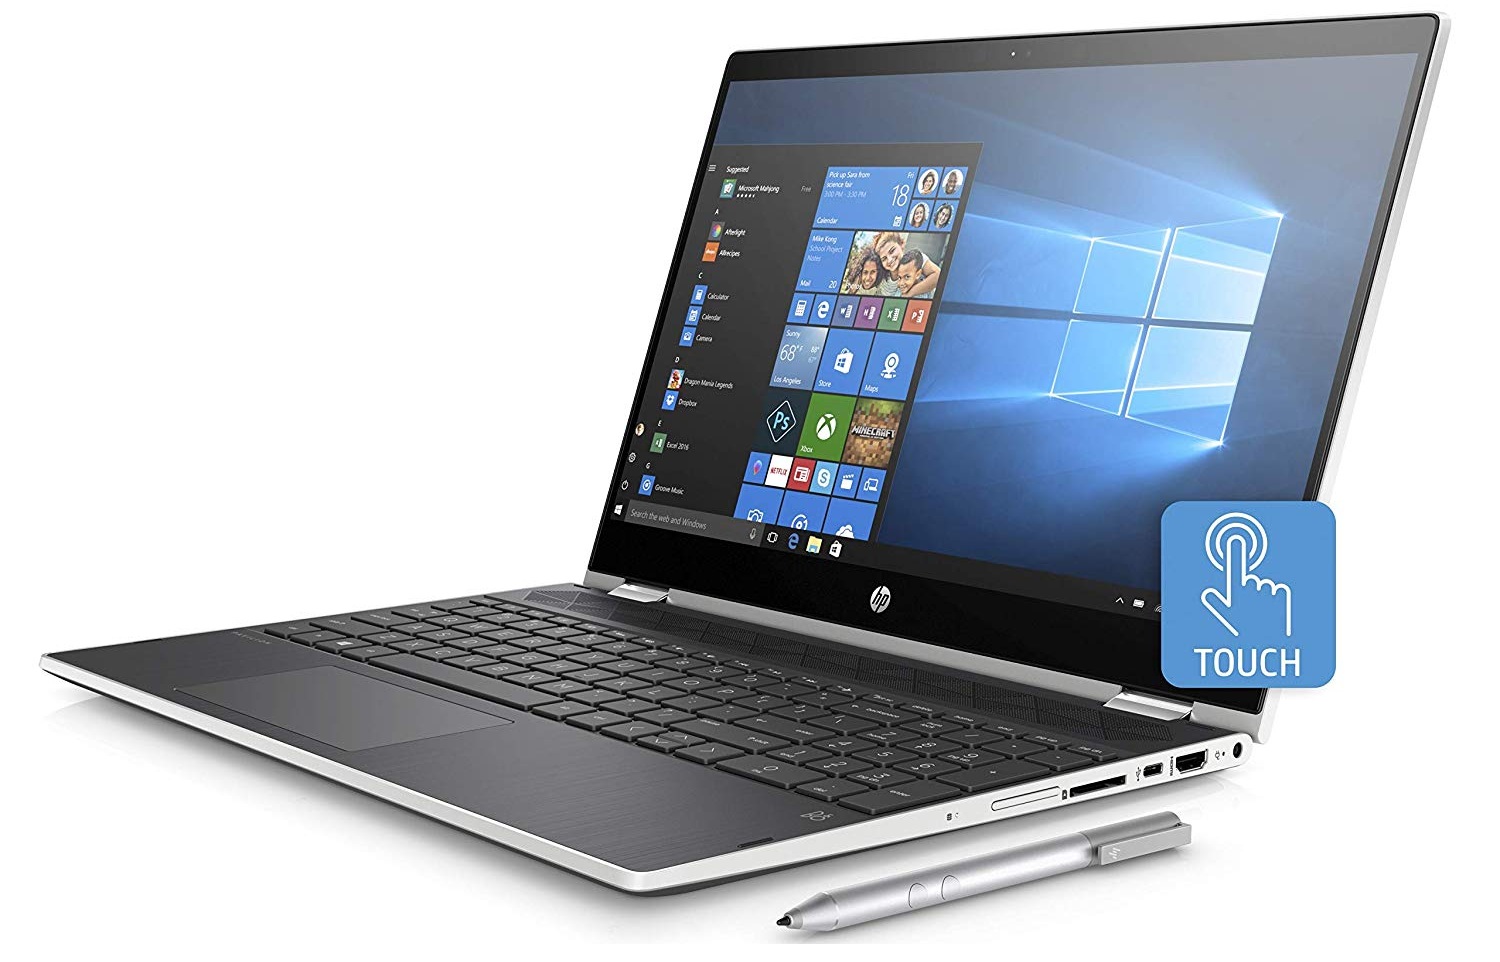 HP 2019 Pavilion x360 Premium 15.6 Inch FHD 1080p 2-in-1 Laptop